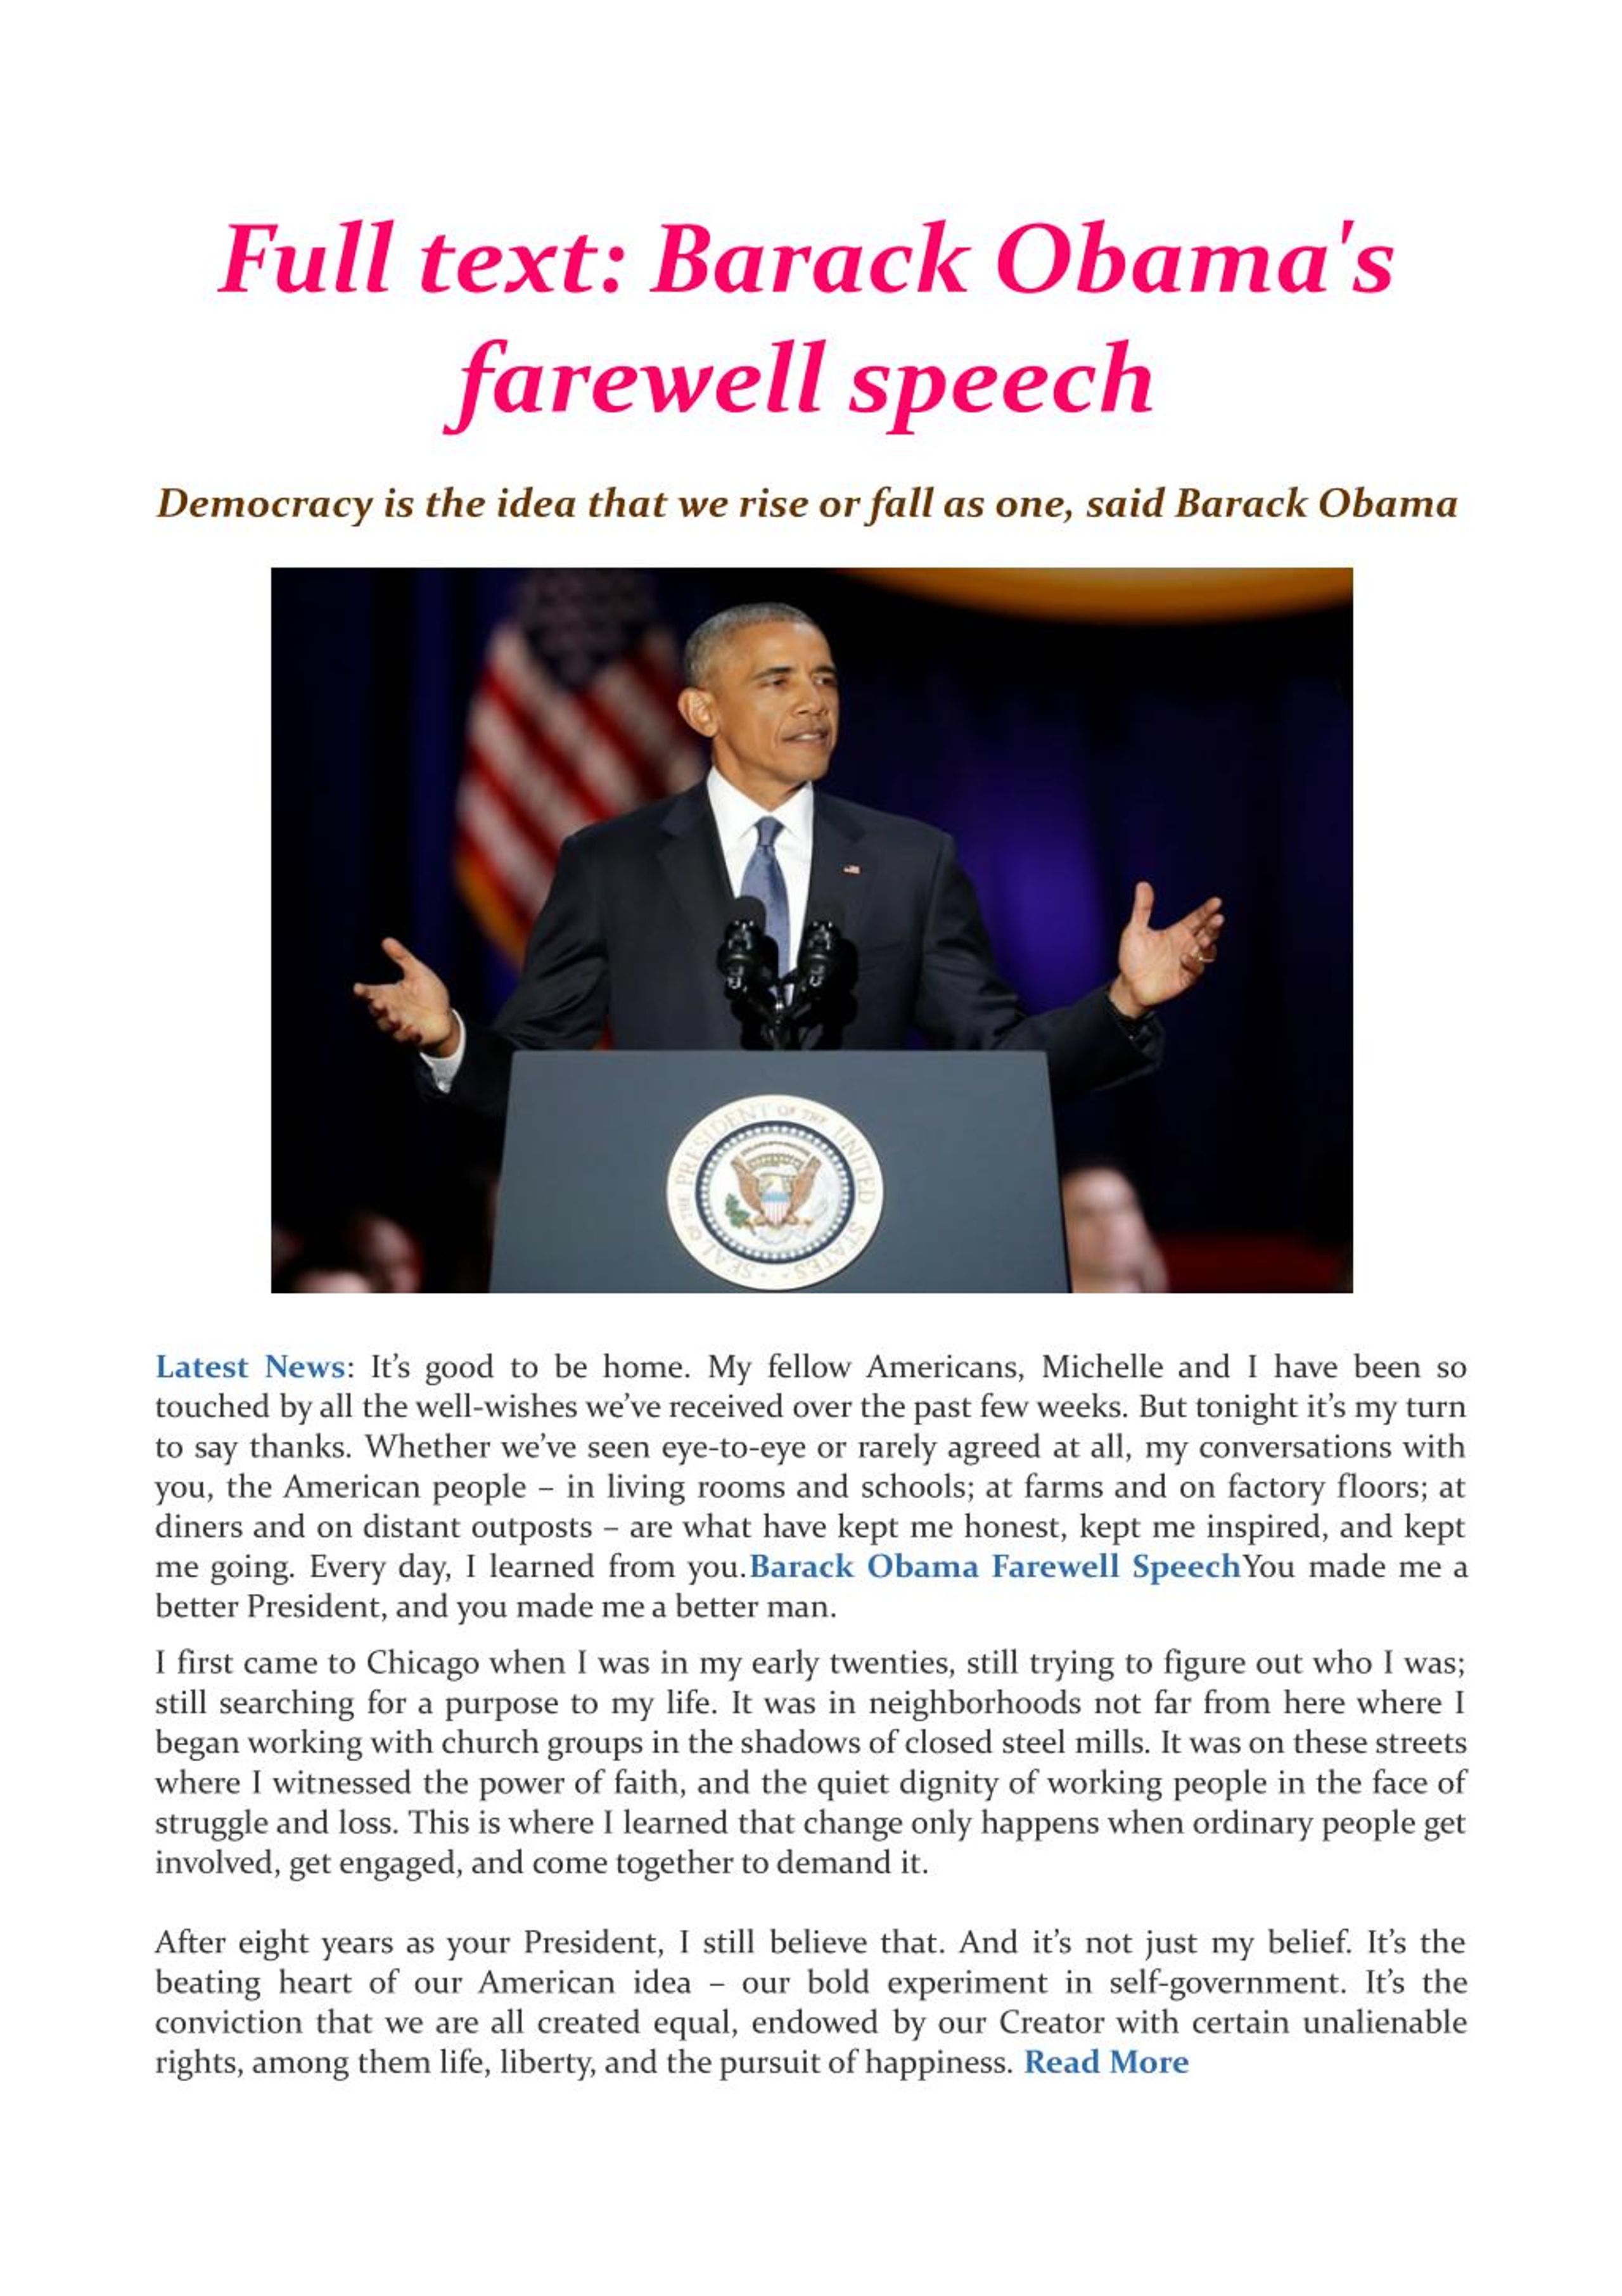 obama farewell speech analysis essay